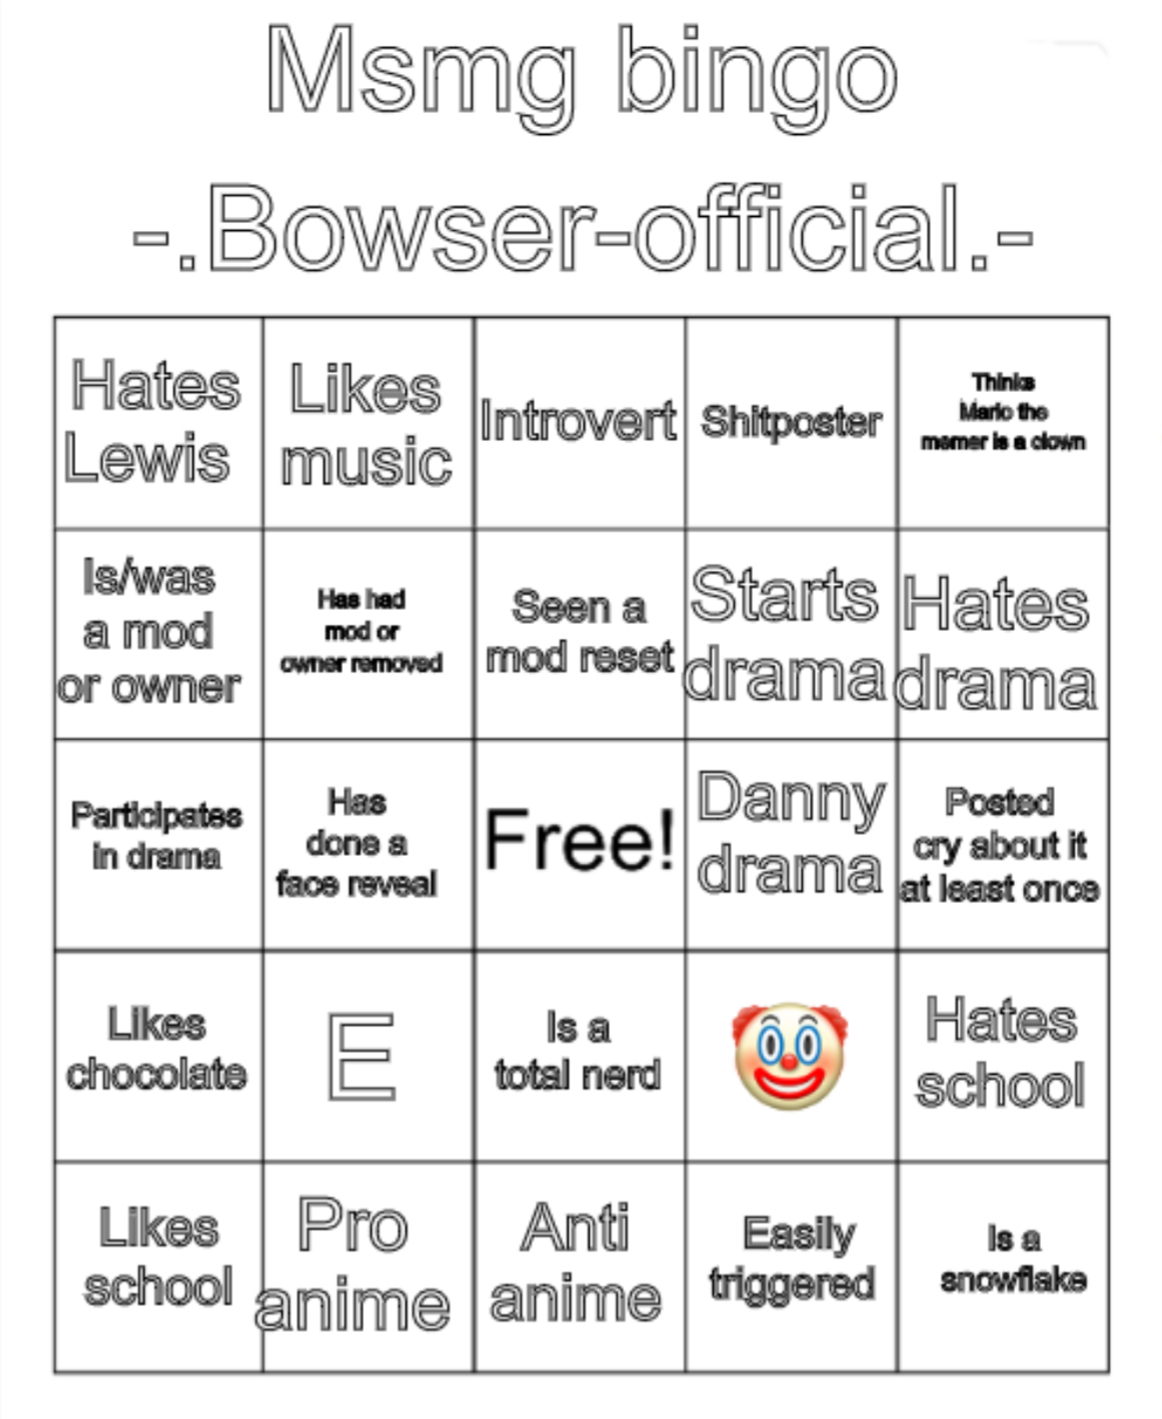 Msmg bingo. -.Bowser-official.- version Blank Meme Template